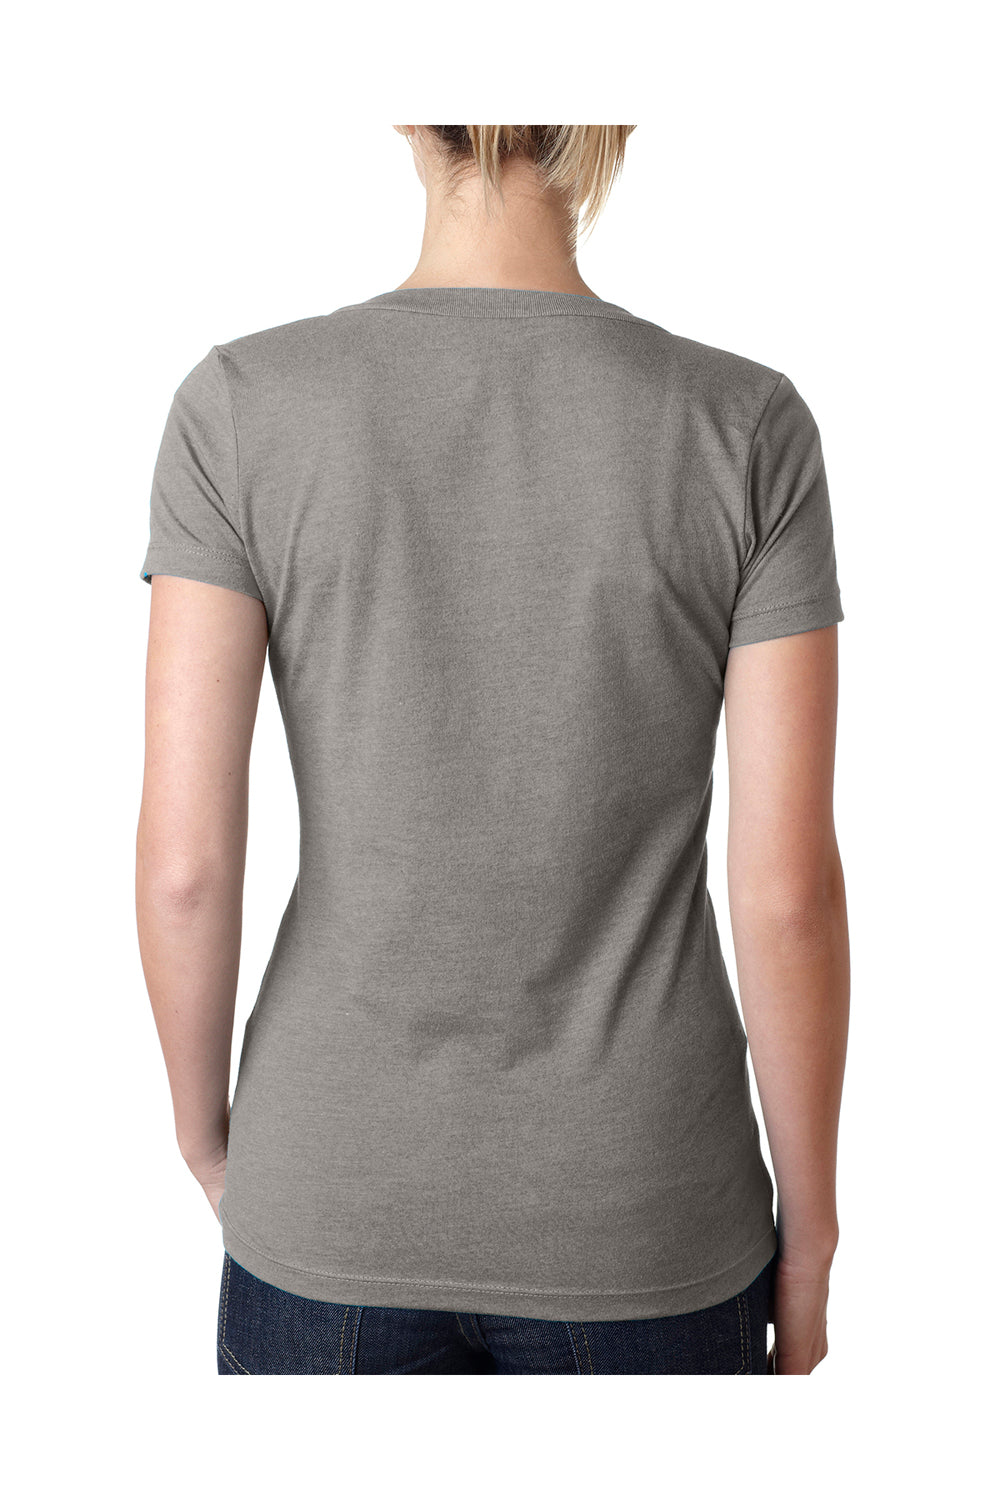 Next Level 6640 Womens CVC Jersey Short Sleeve V-Neck T-Shirt Stone Grey Back